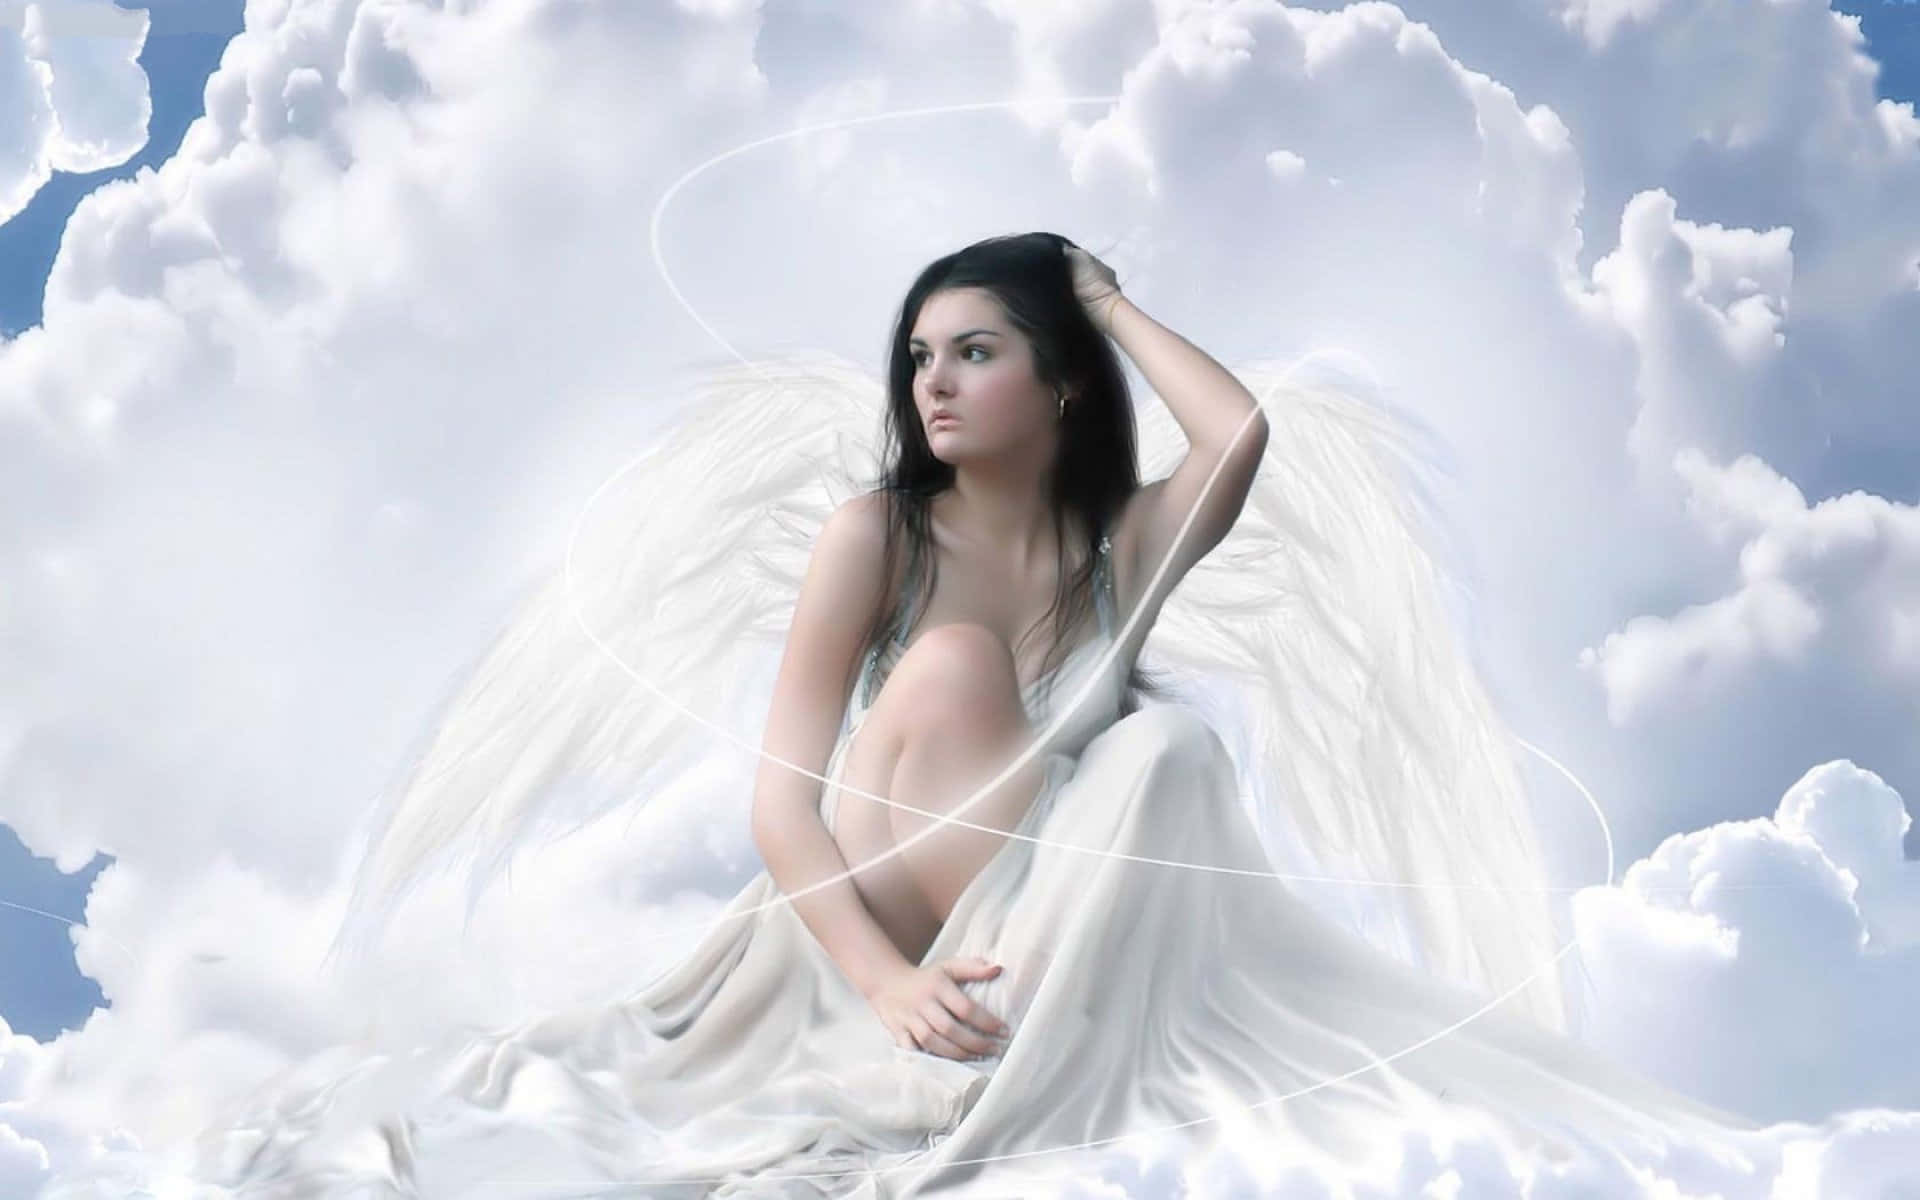 Serene Angelic Figure In Heavenly Surroundings Wallpaper